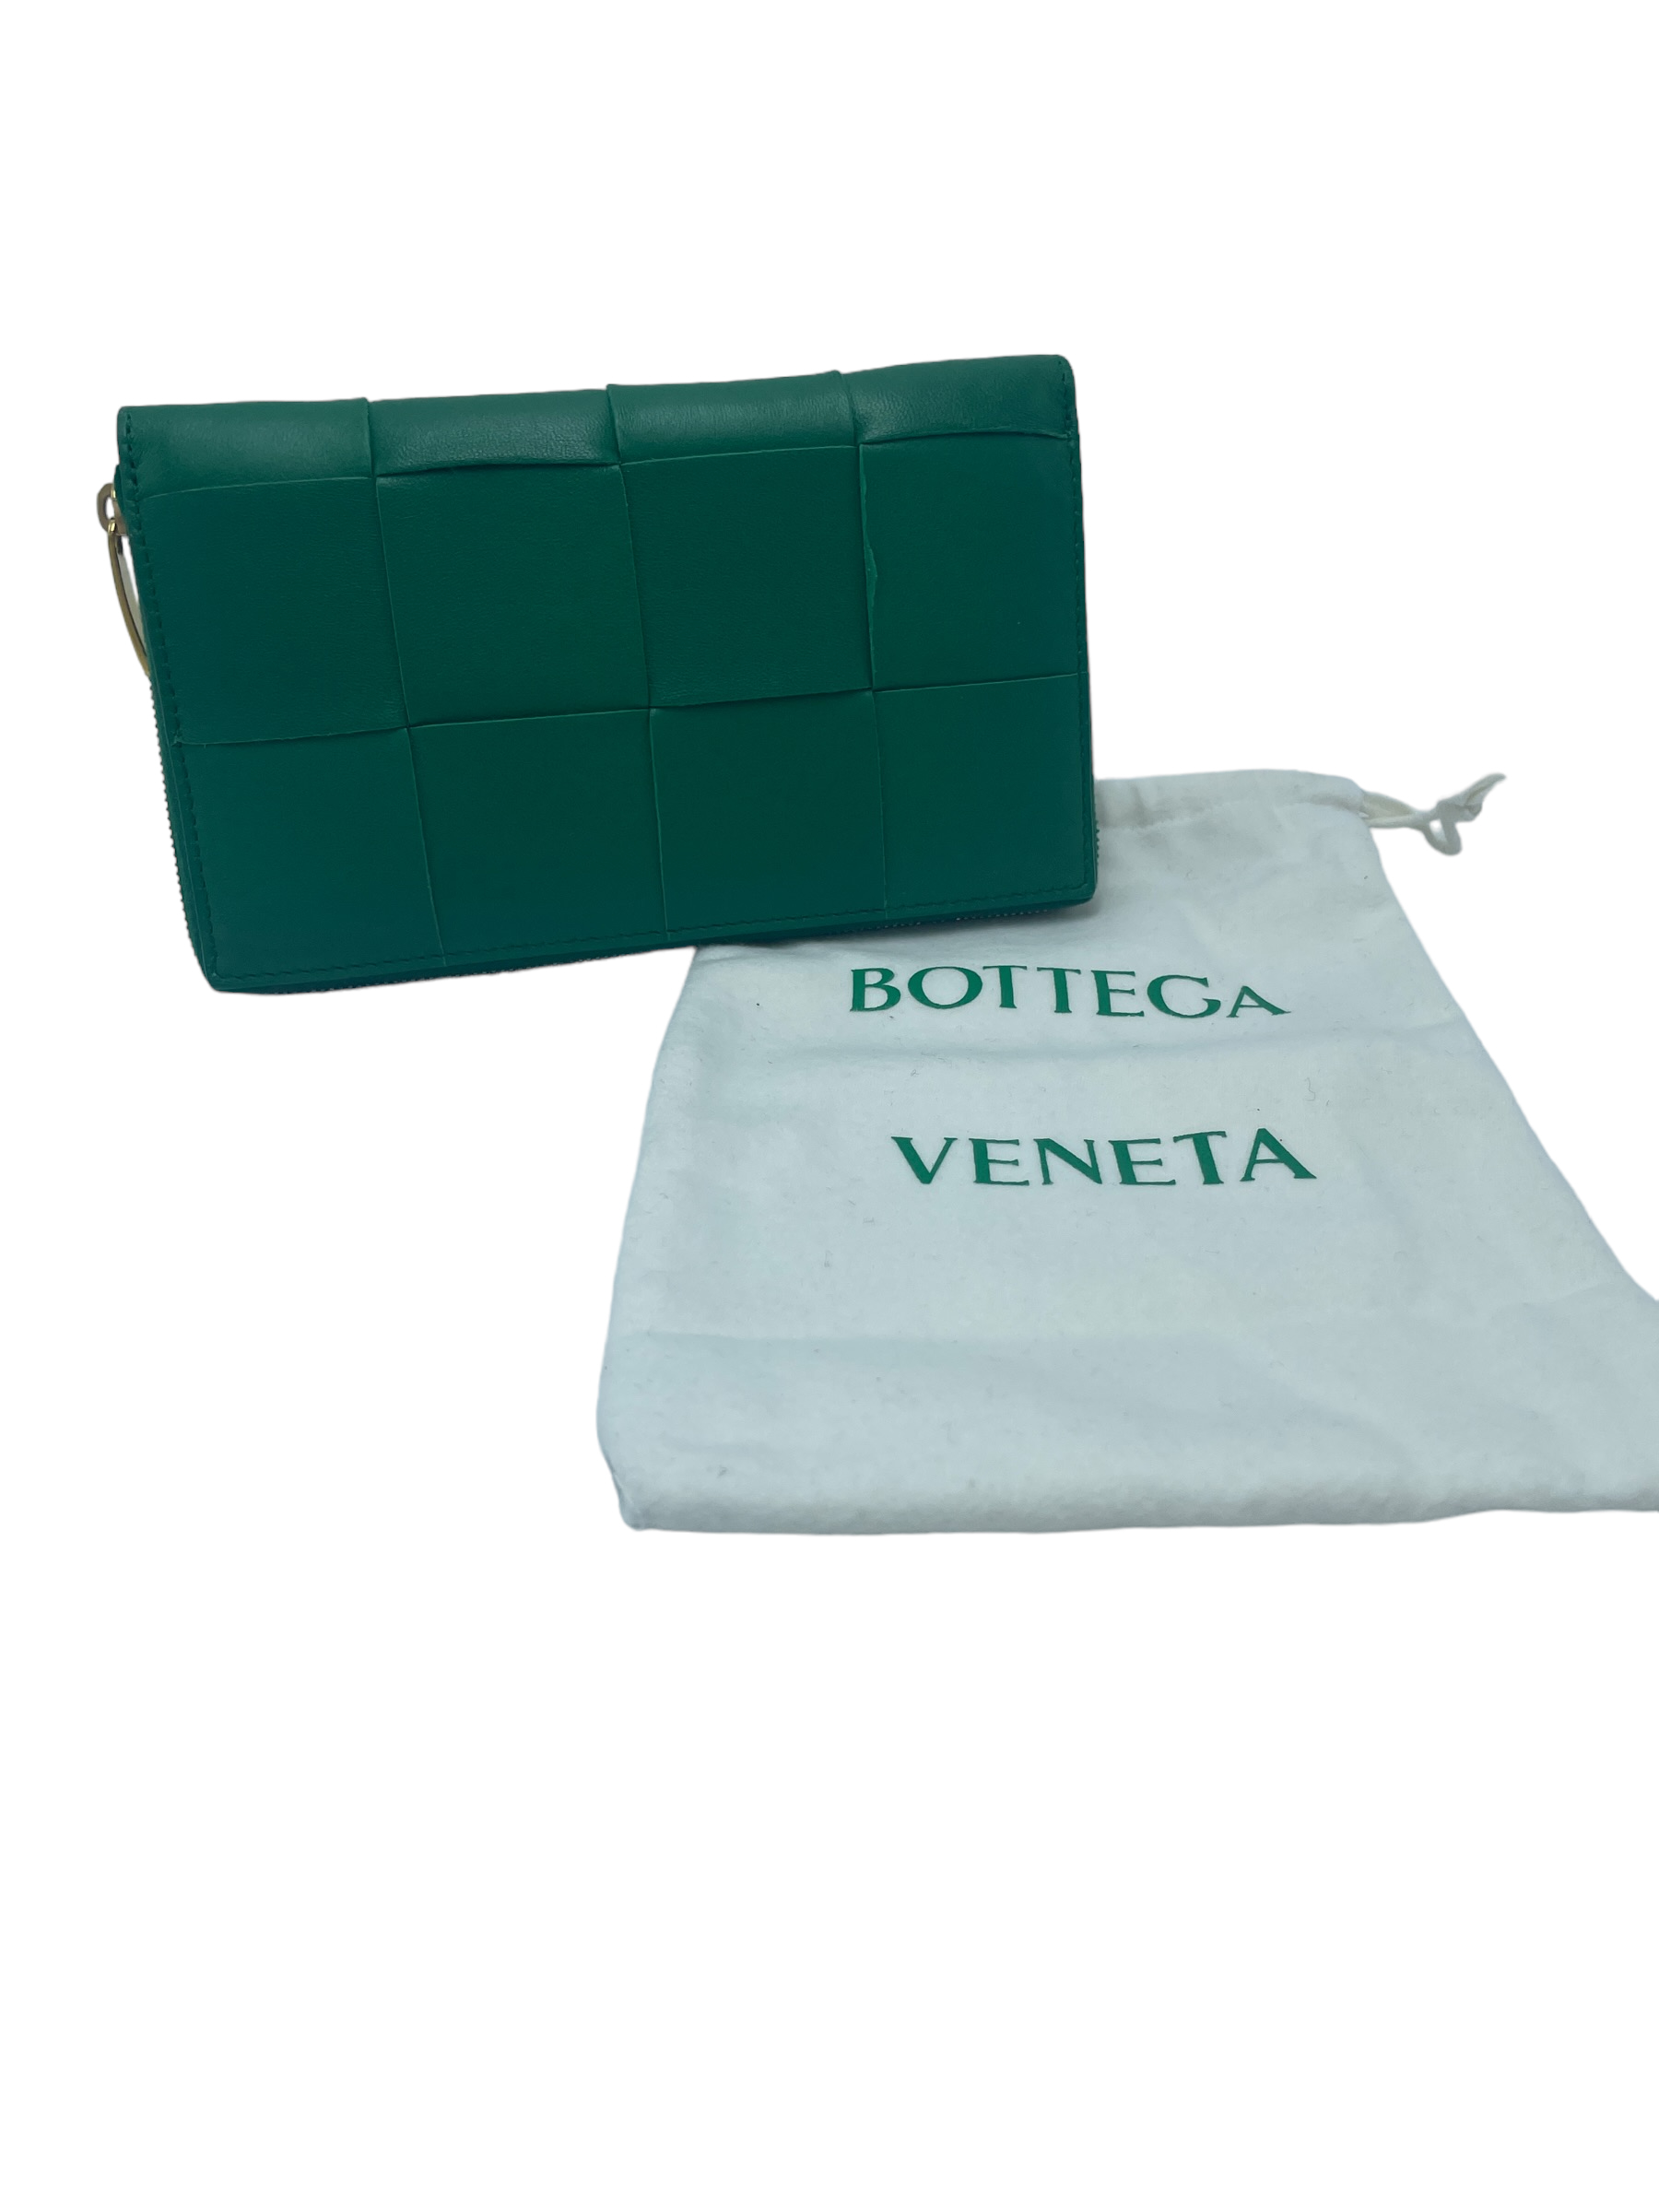 Bottega Cassette ZipAround, Green, Size: OS<br />
<br />
condition: PRISTINE. dustbag included<br />
<br />
7.5 x 4.5 x .75 inches<br />
<br />
original retail: $1000